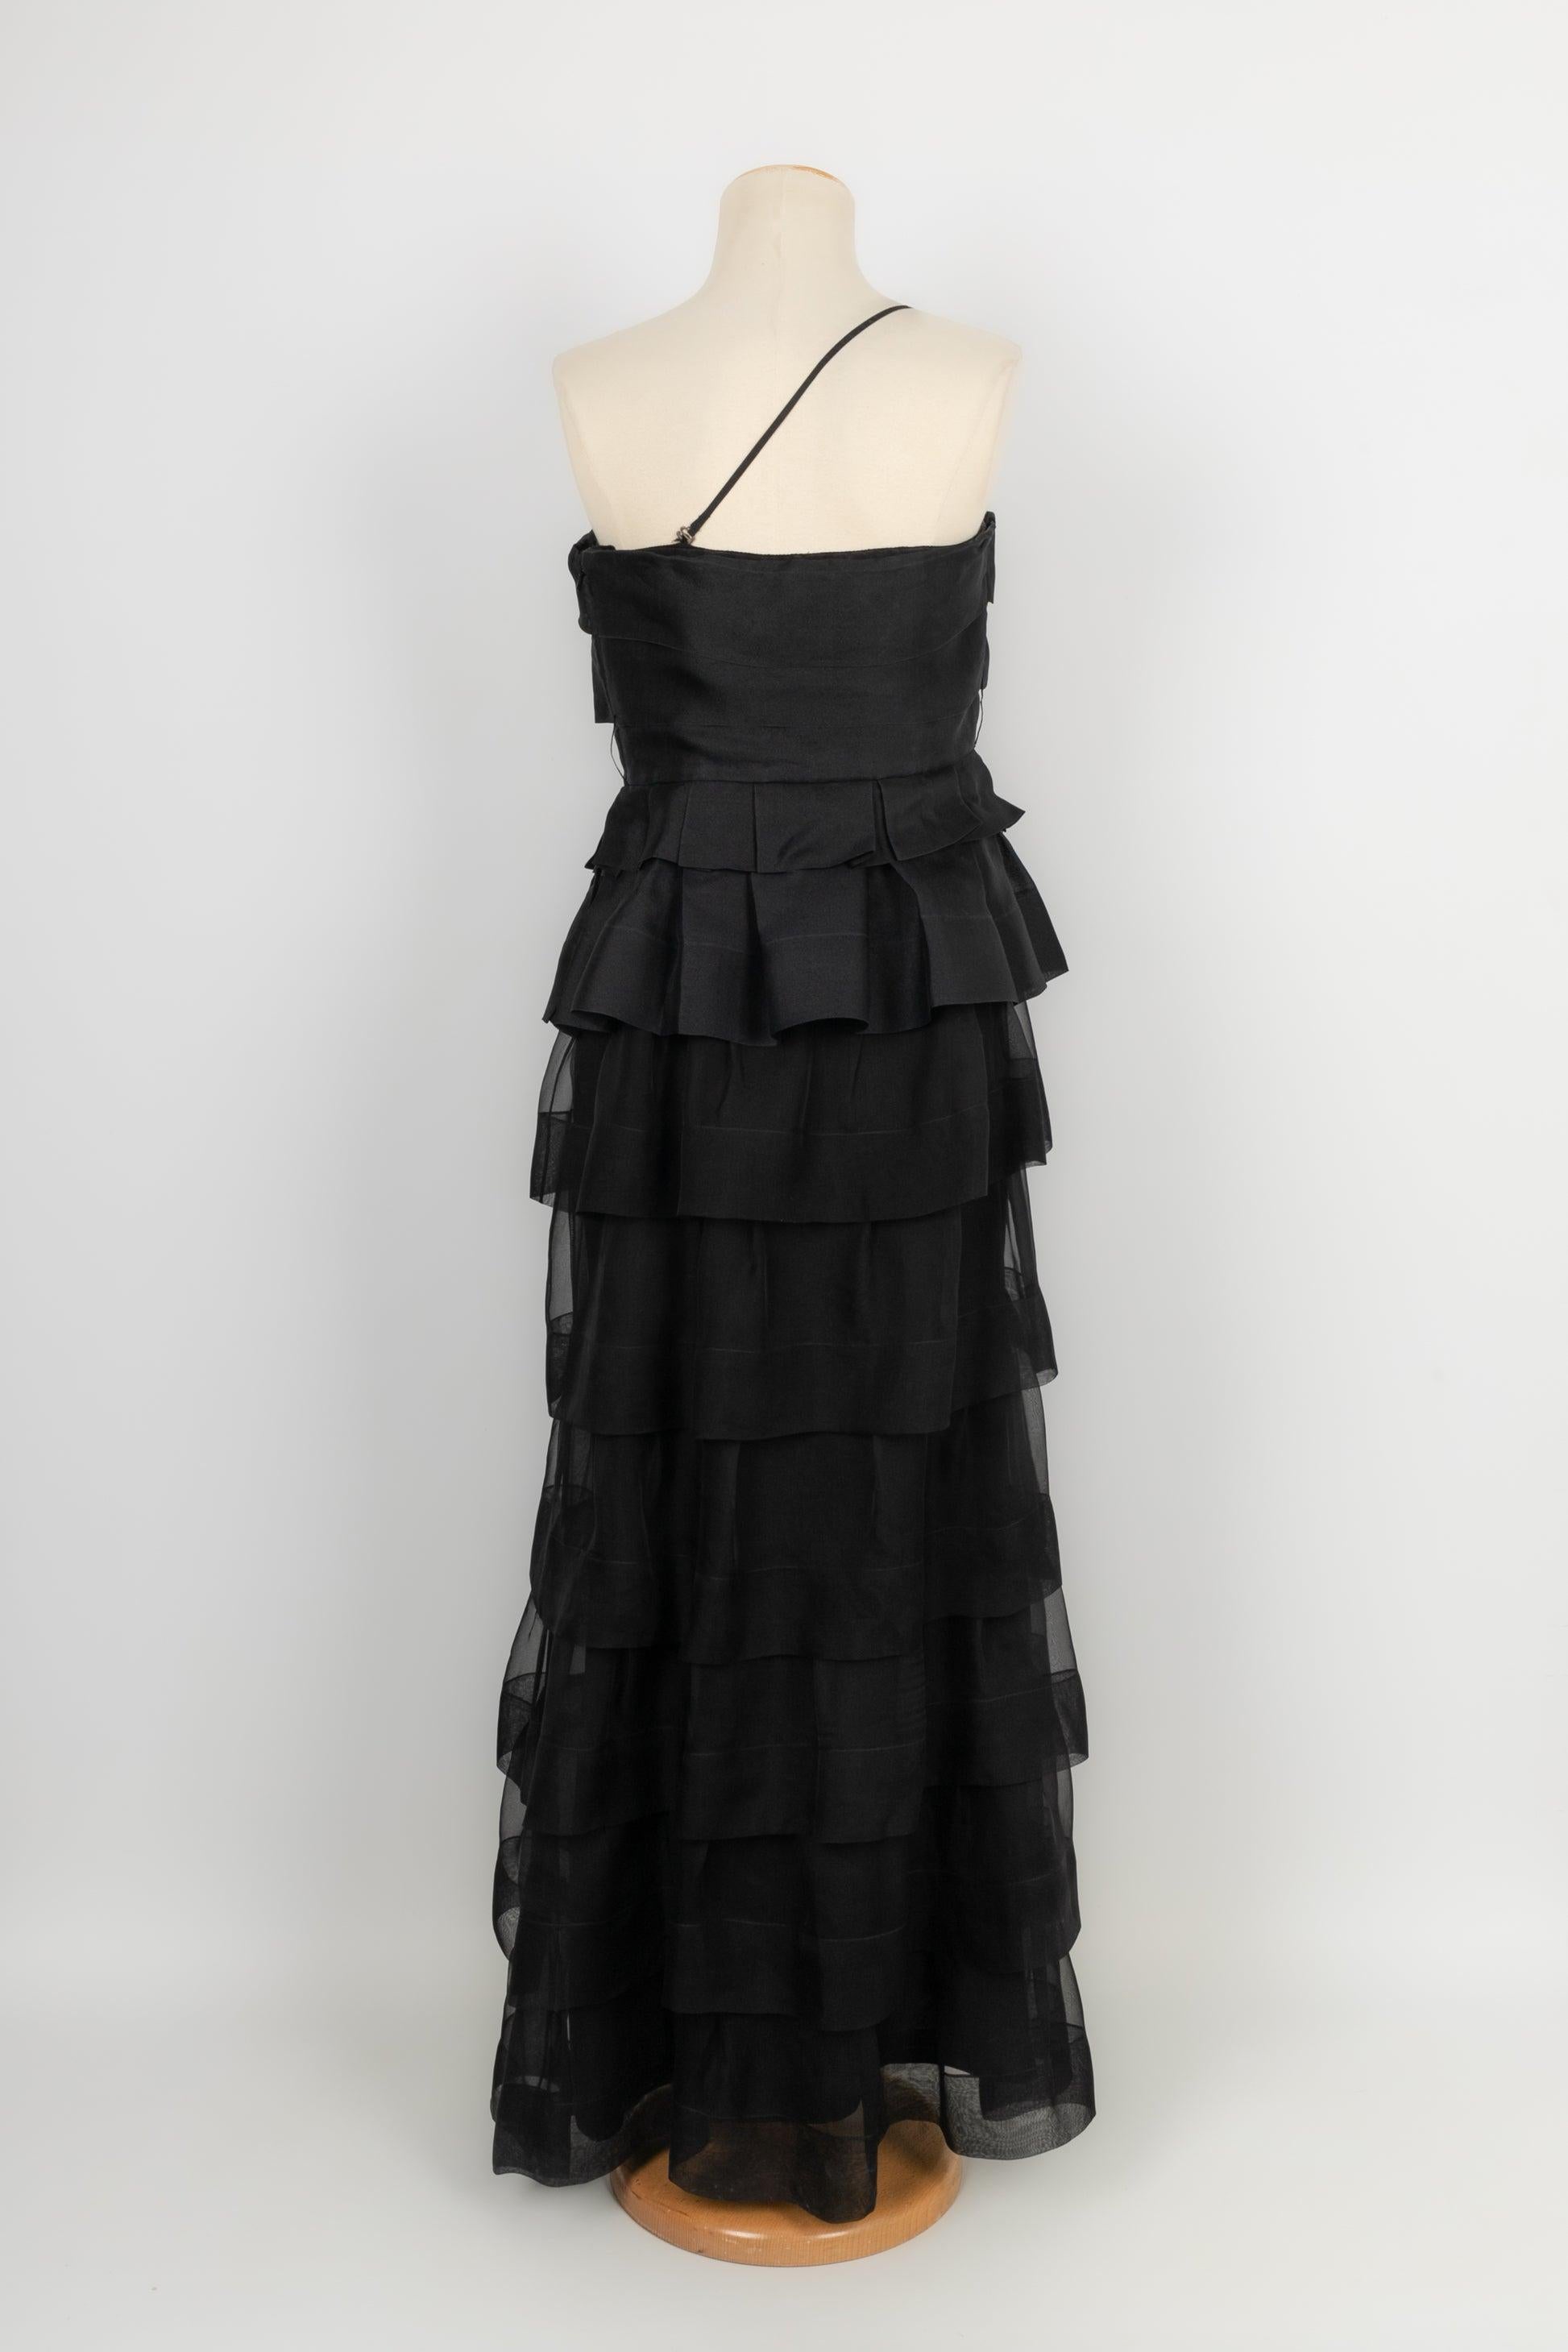 Christian Dior Black Silk Flounced Bustier Dress 42FR, 2009 1